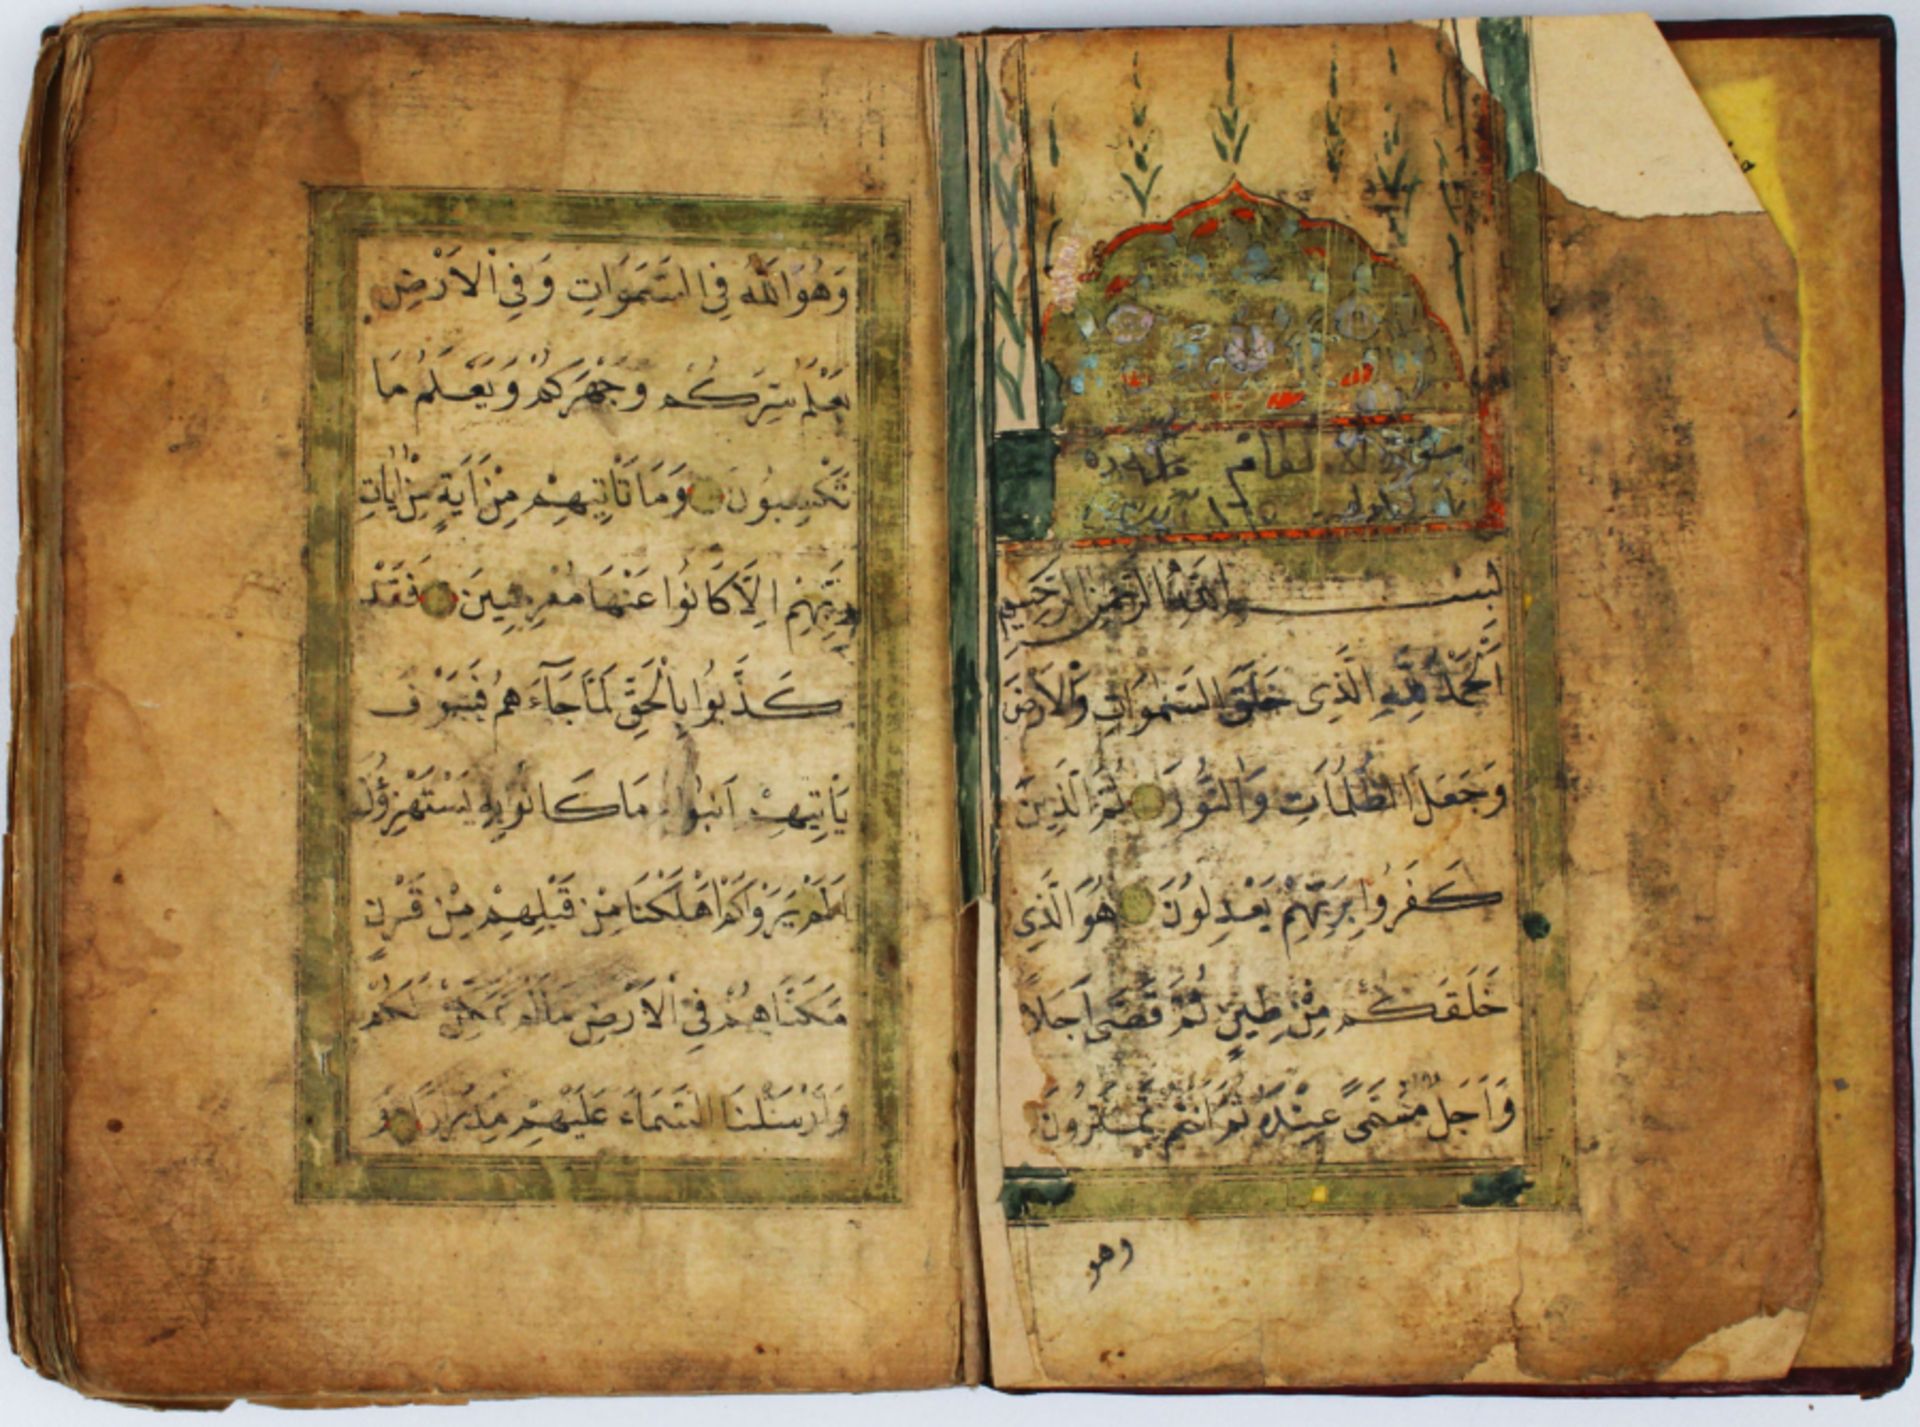 An 19th century Ottoman period handwritten Dalil Al Khiraat, written by Mohamed Effendi